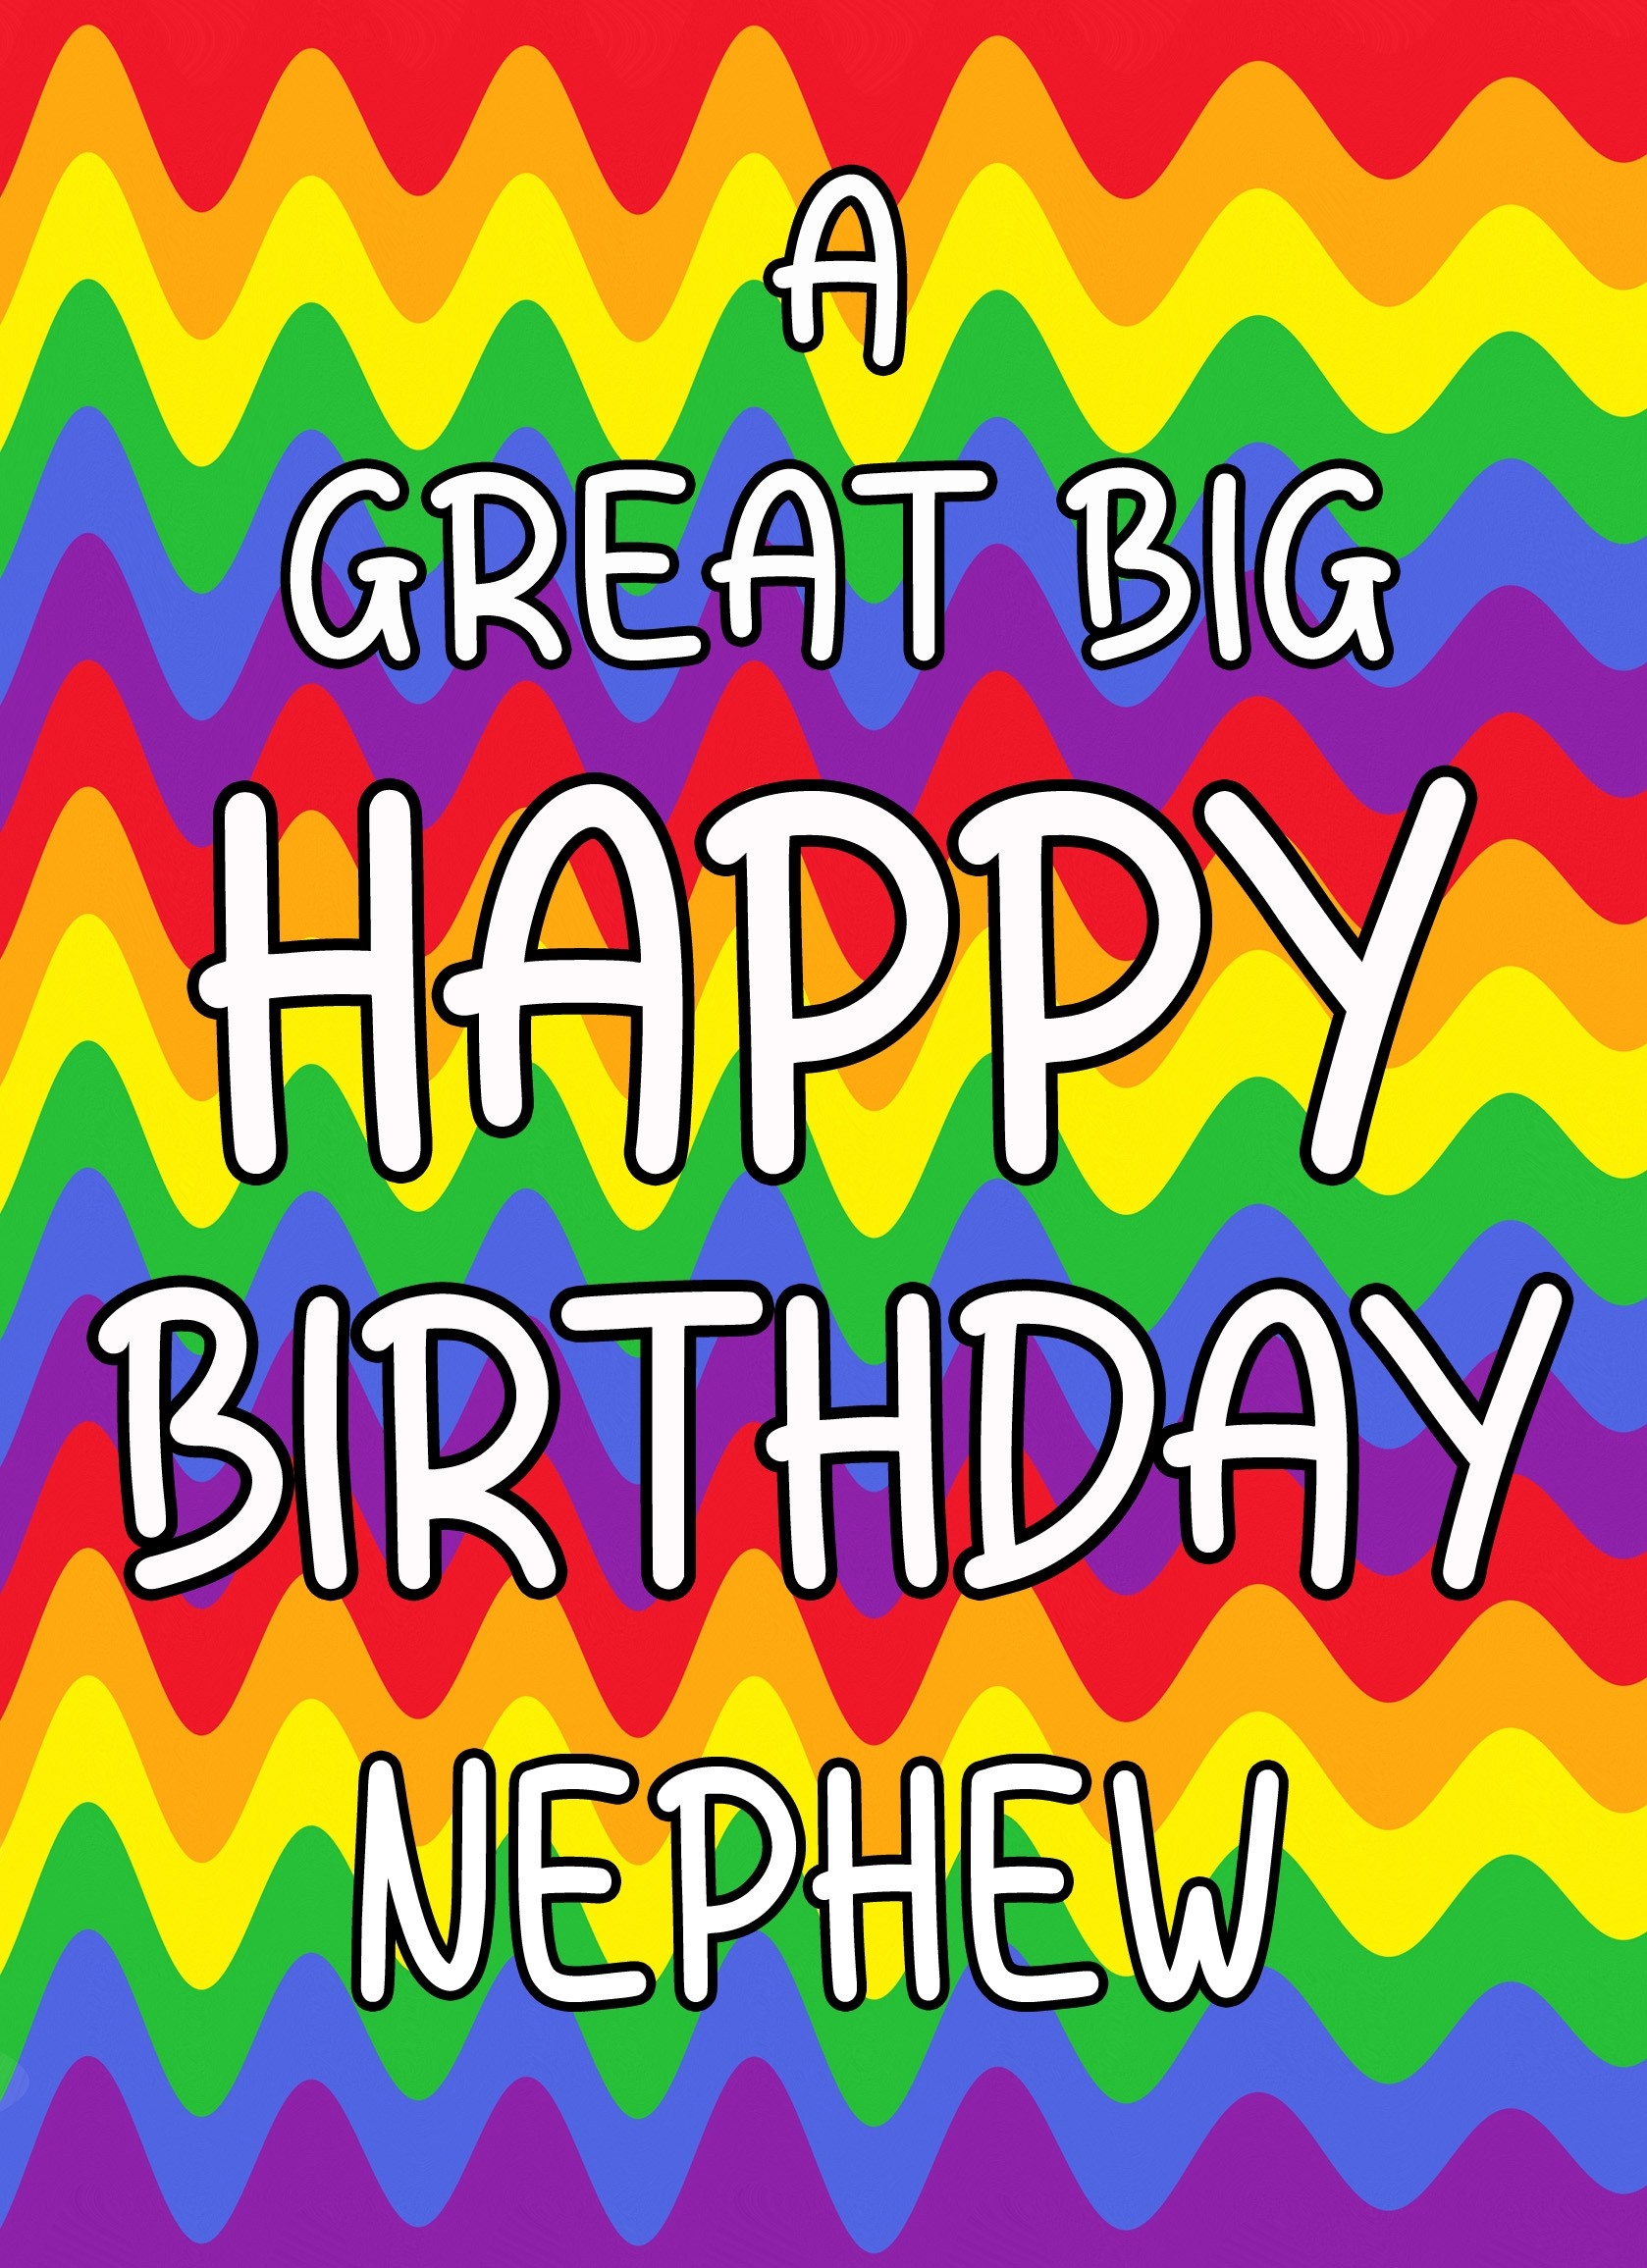 Happy Birthday 'Nephew' Greeting Card (Rainbow)